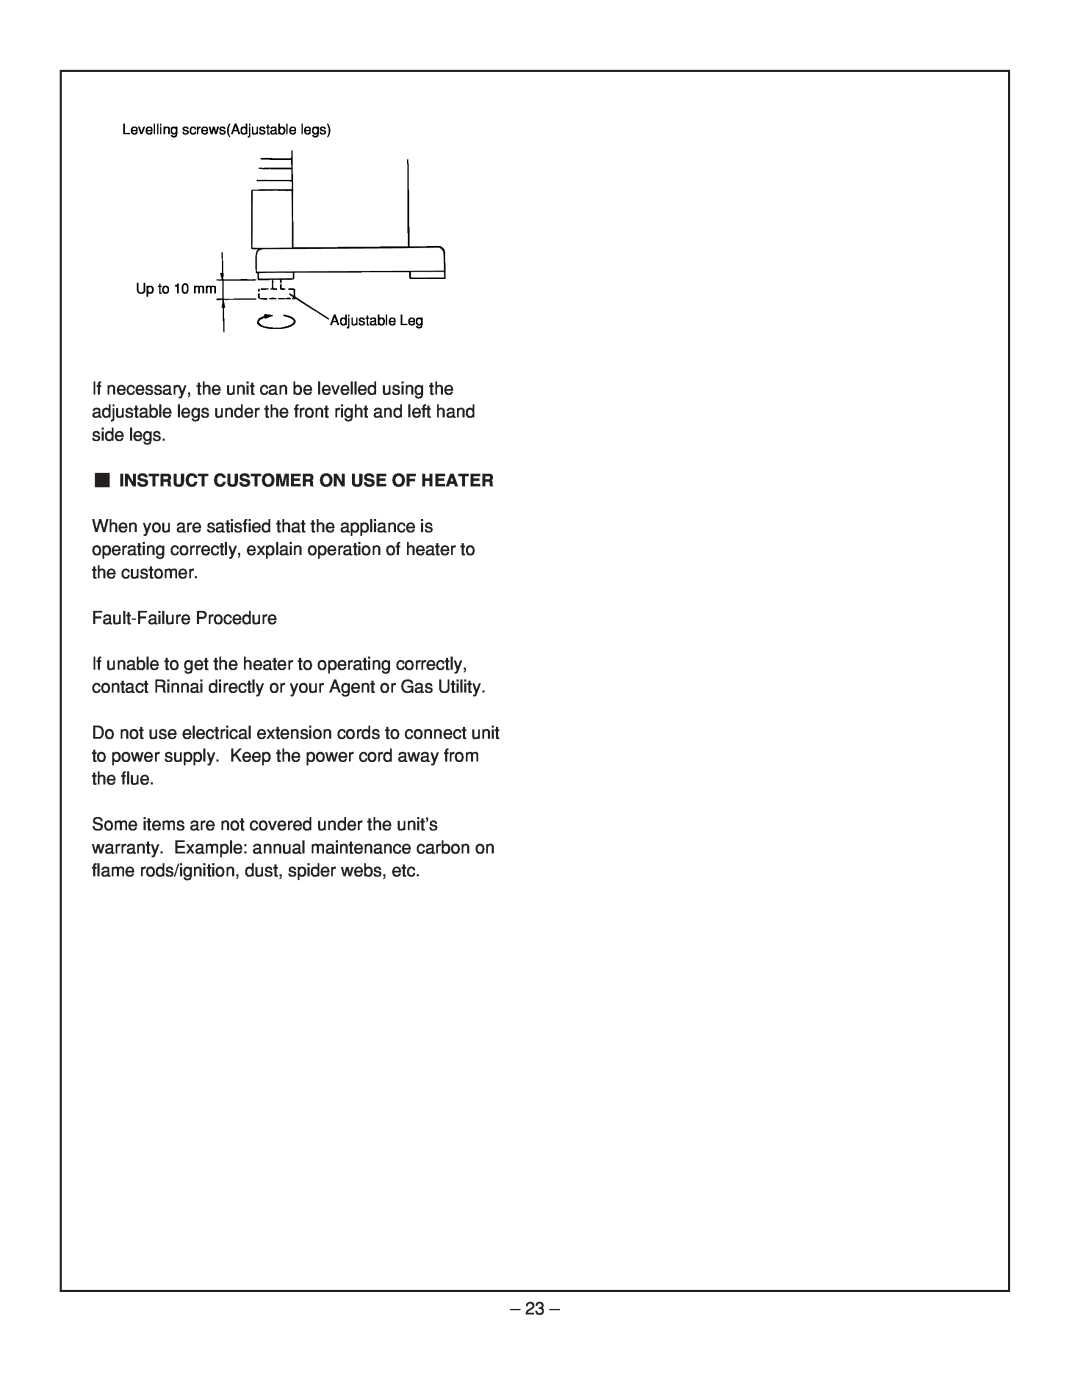 Rinnai RHFE-431FA installation manual Instruct Customer On Use Of Heater 